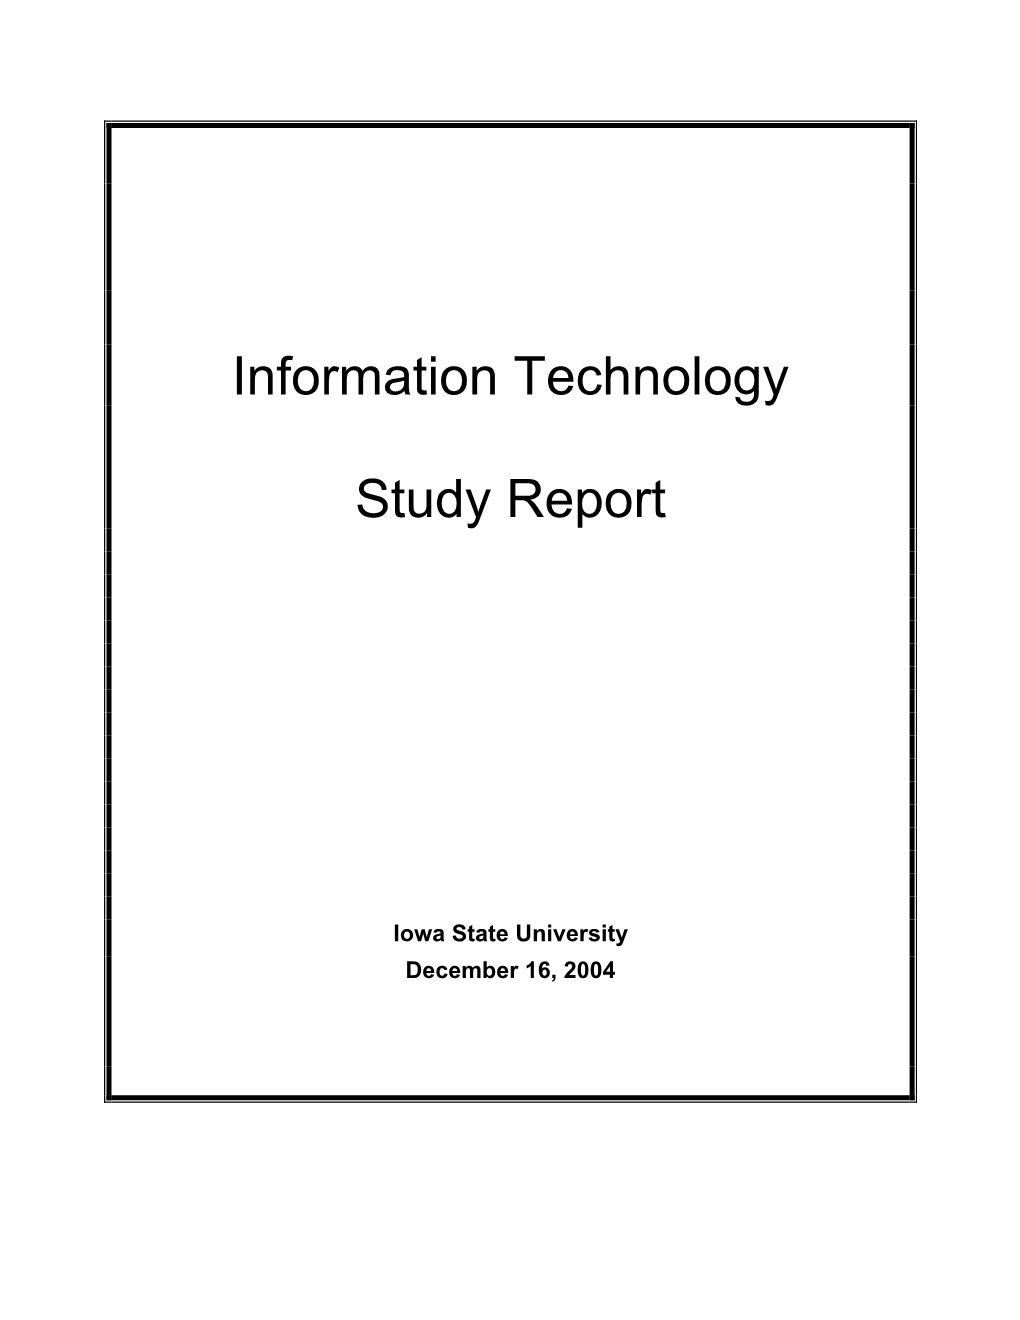 Information Technology Study Report 1 December 16, 2004 II